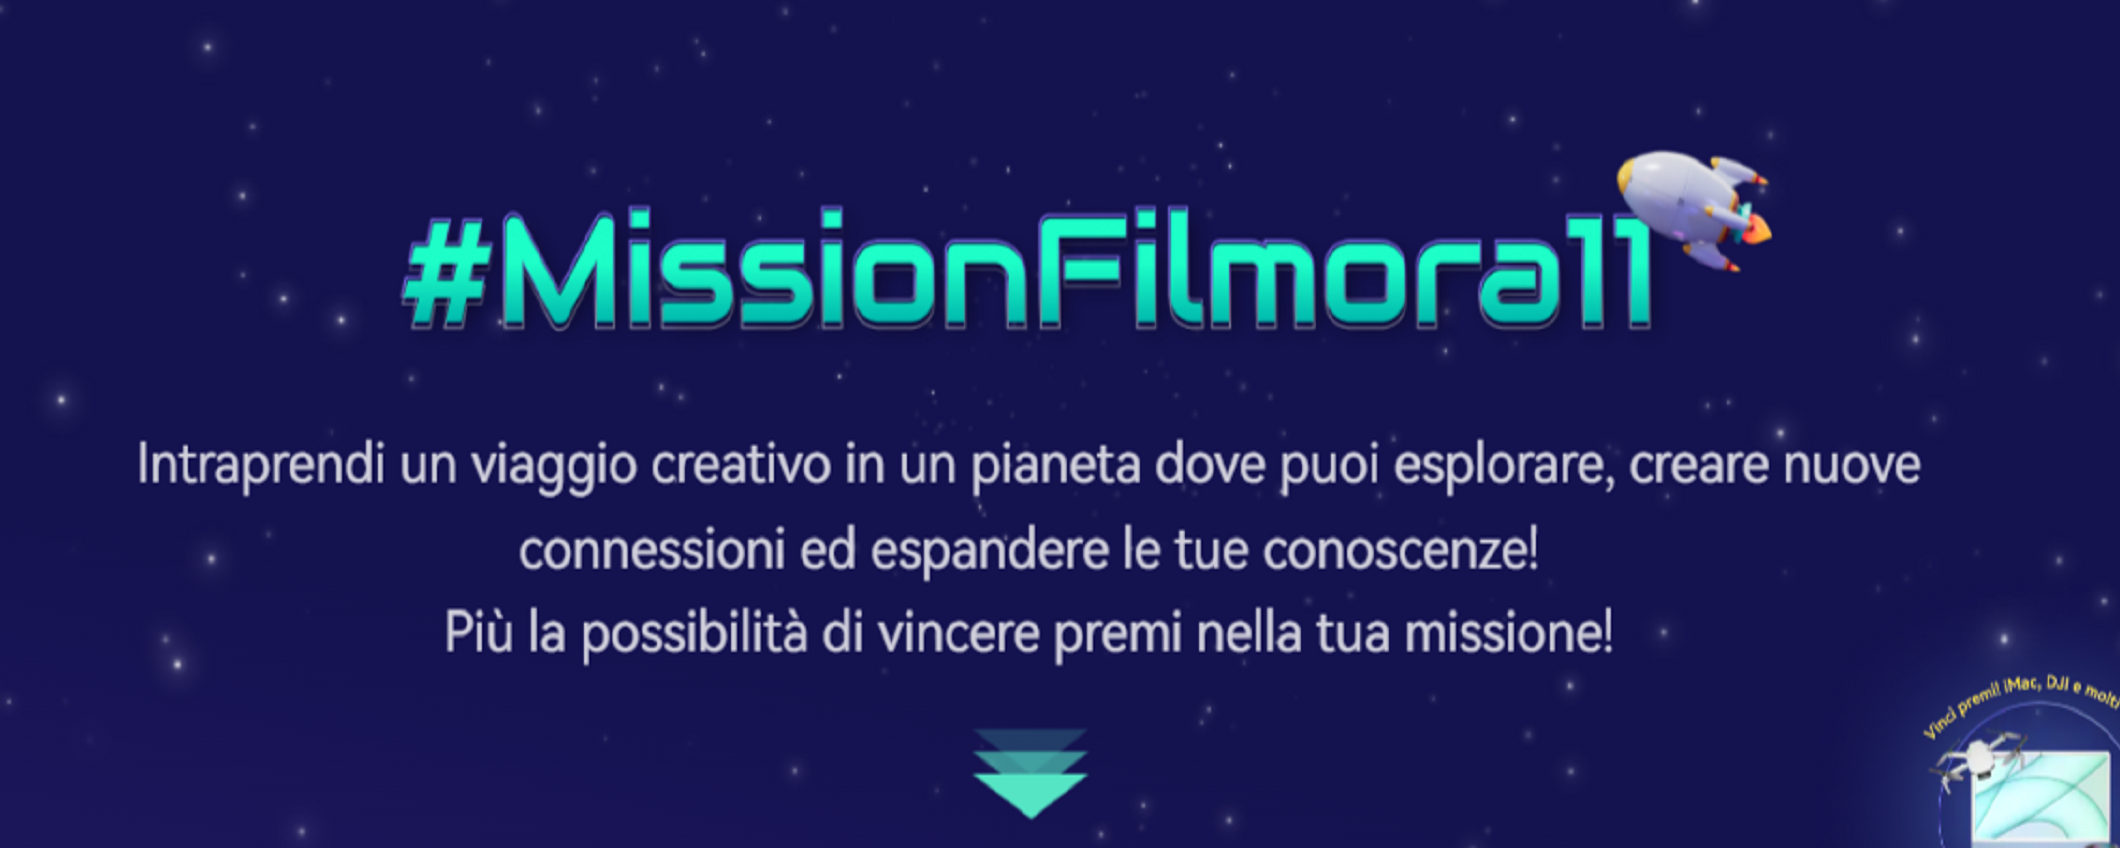 Mission Filmora 11: vinci iMac 2021 e Dji Dronee!